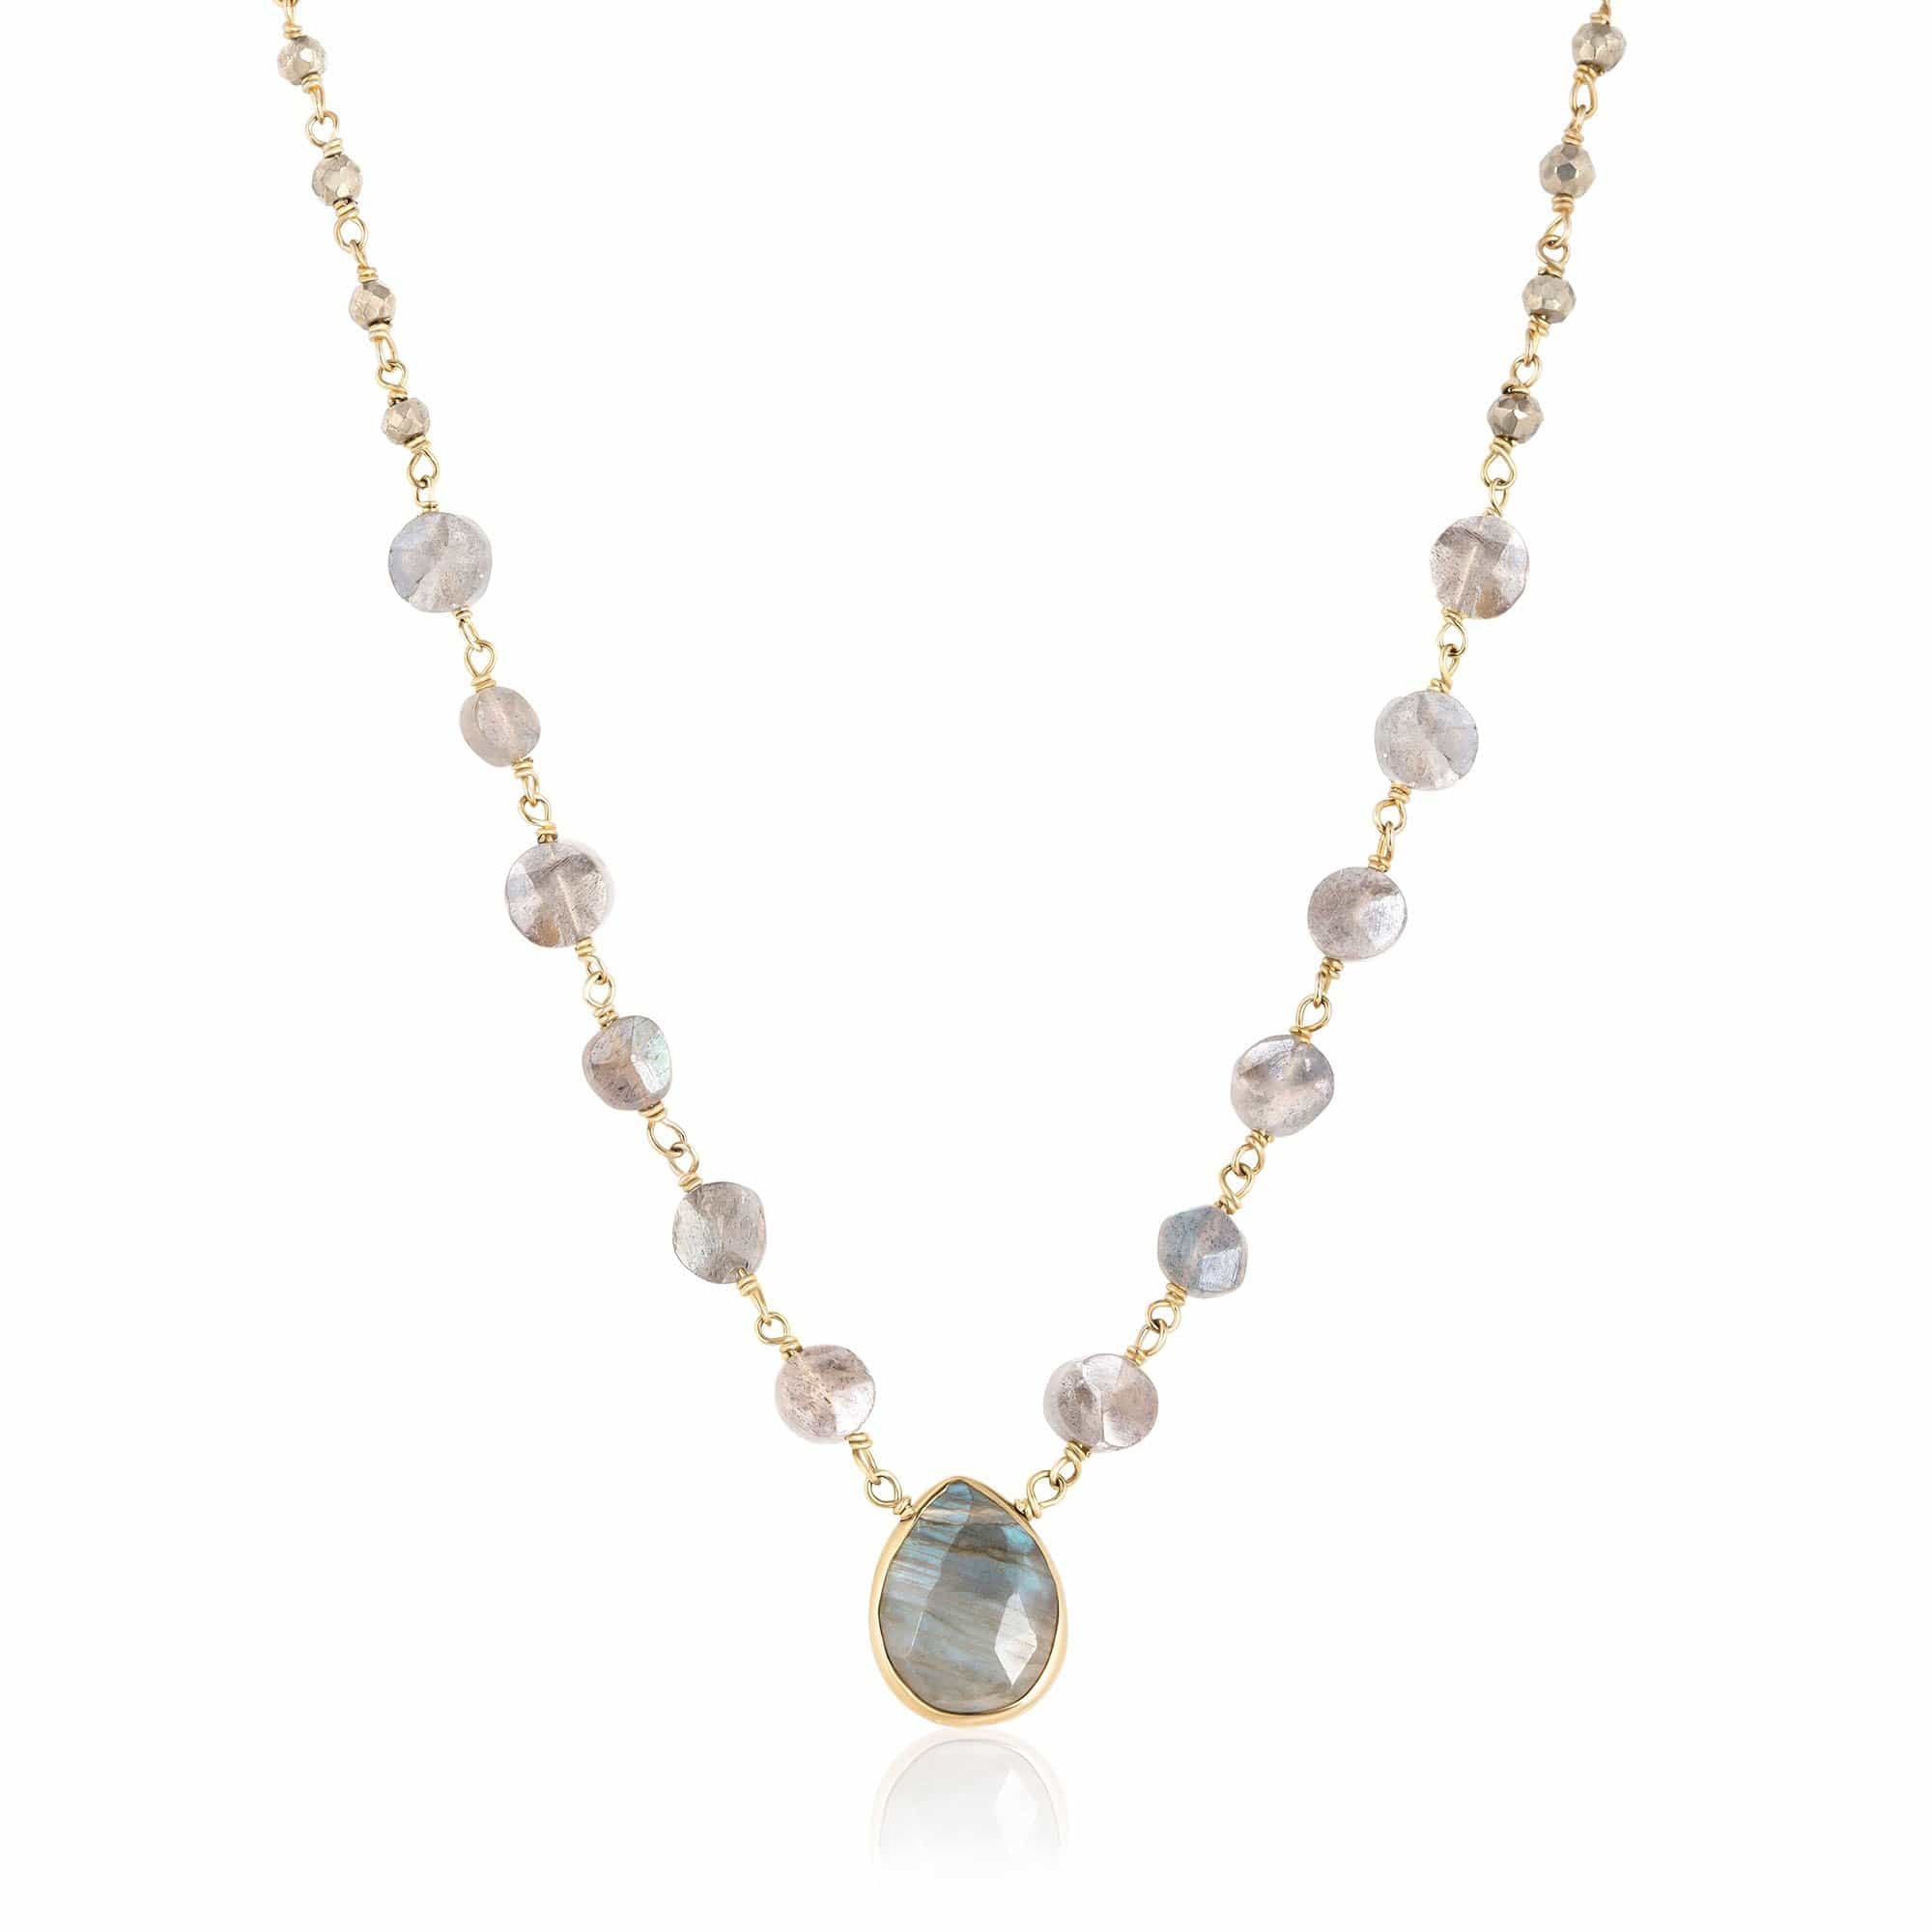 Beads pendant necklace - Women